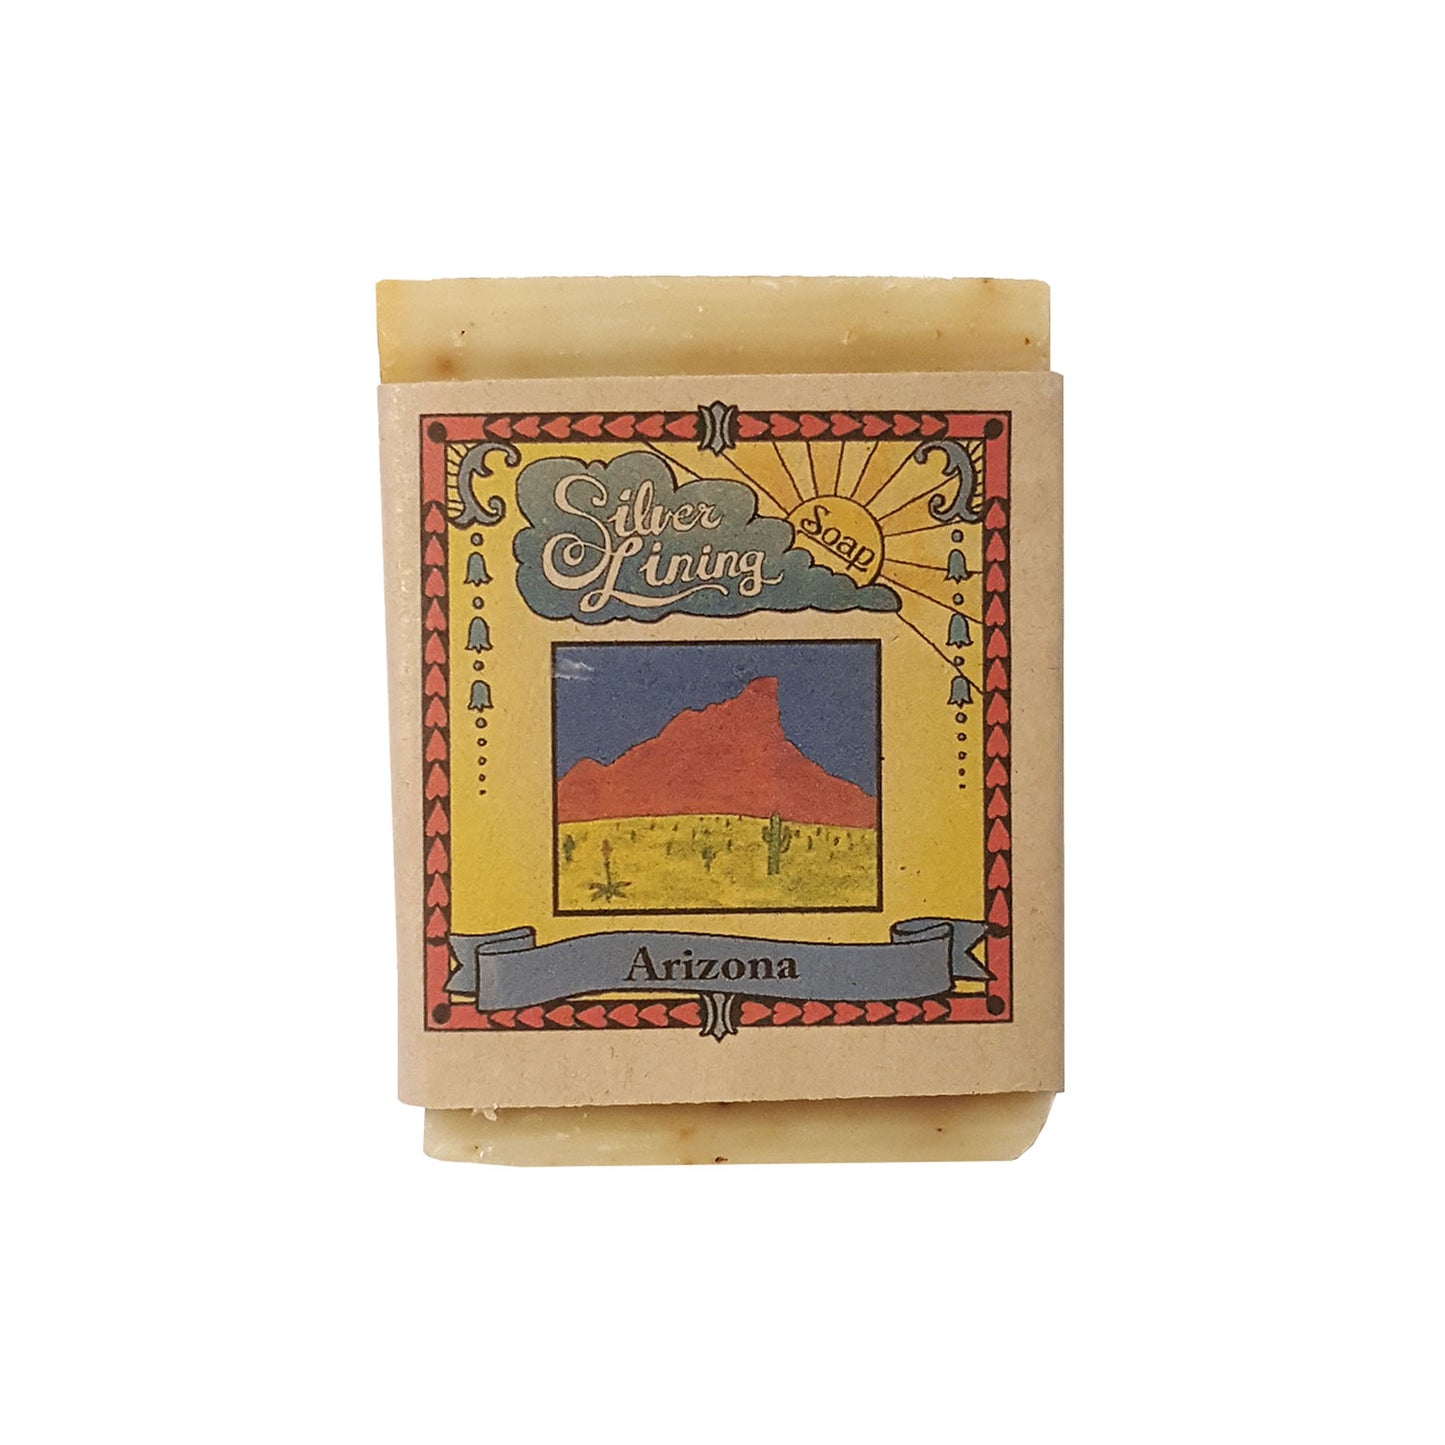 organic, vegan, cruelty free soap. made in Arizona. smells like the desert!